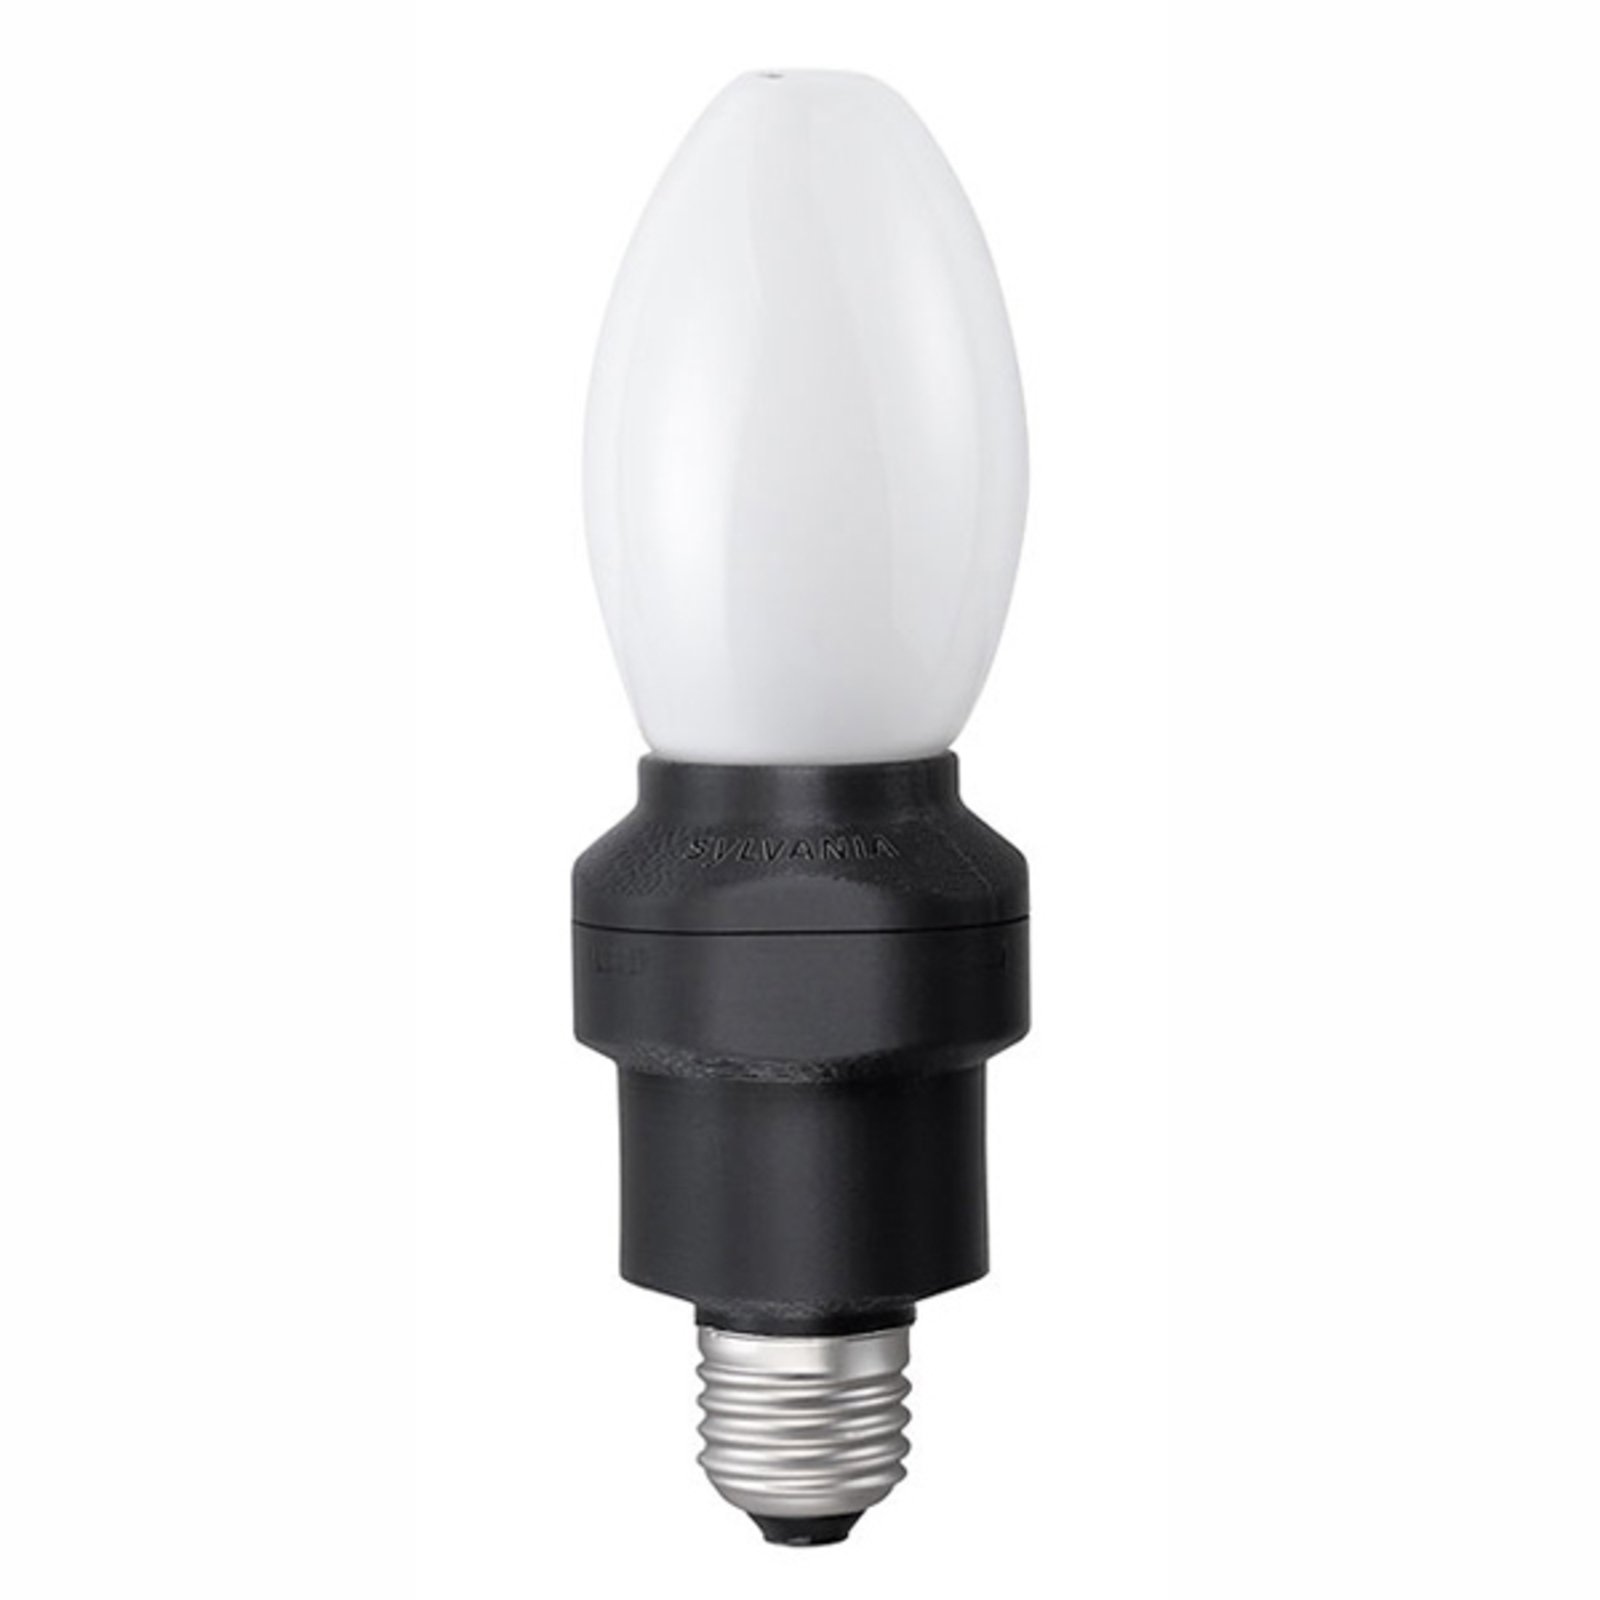 E27 55W 830 metalhalogenlampe Relumina